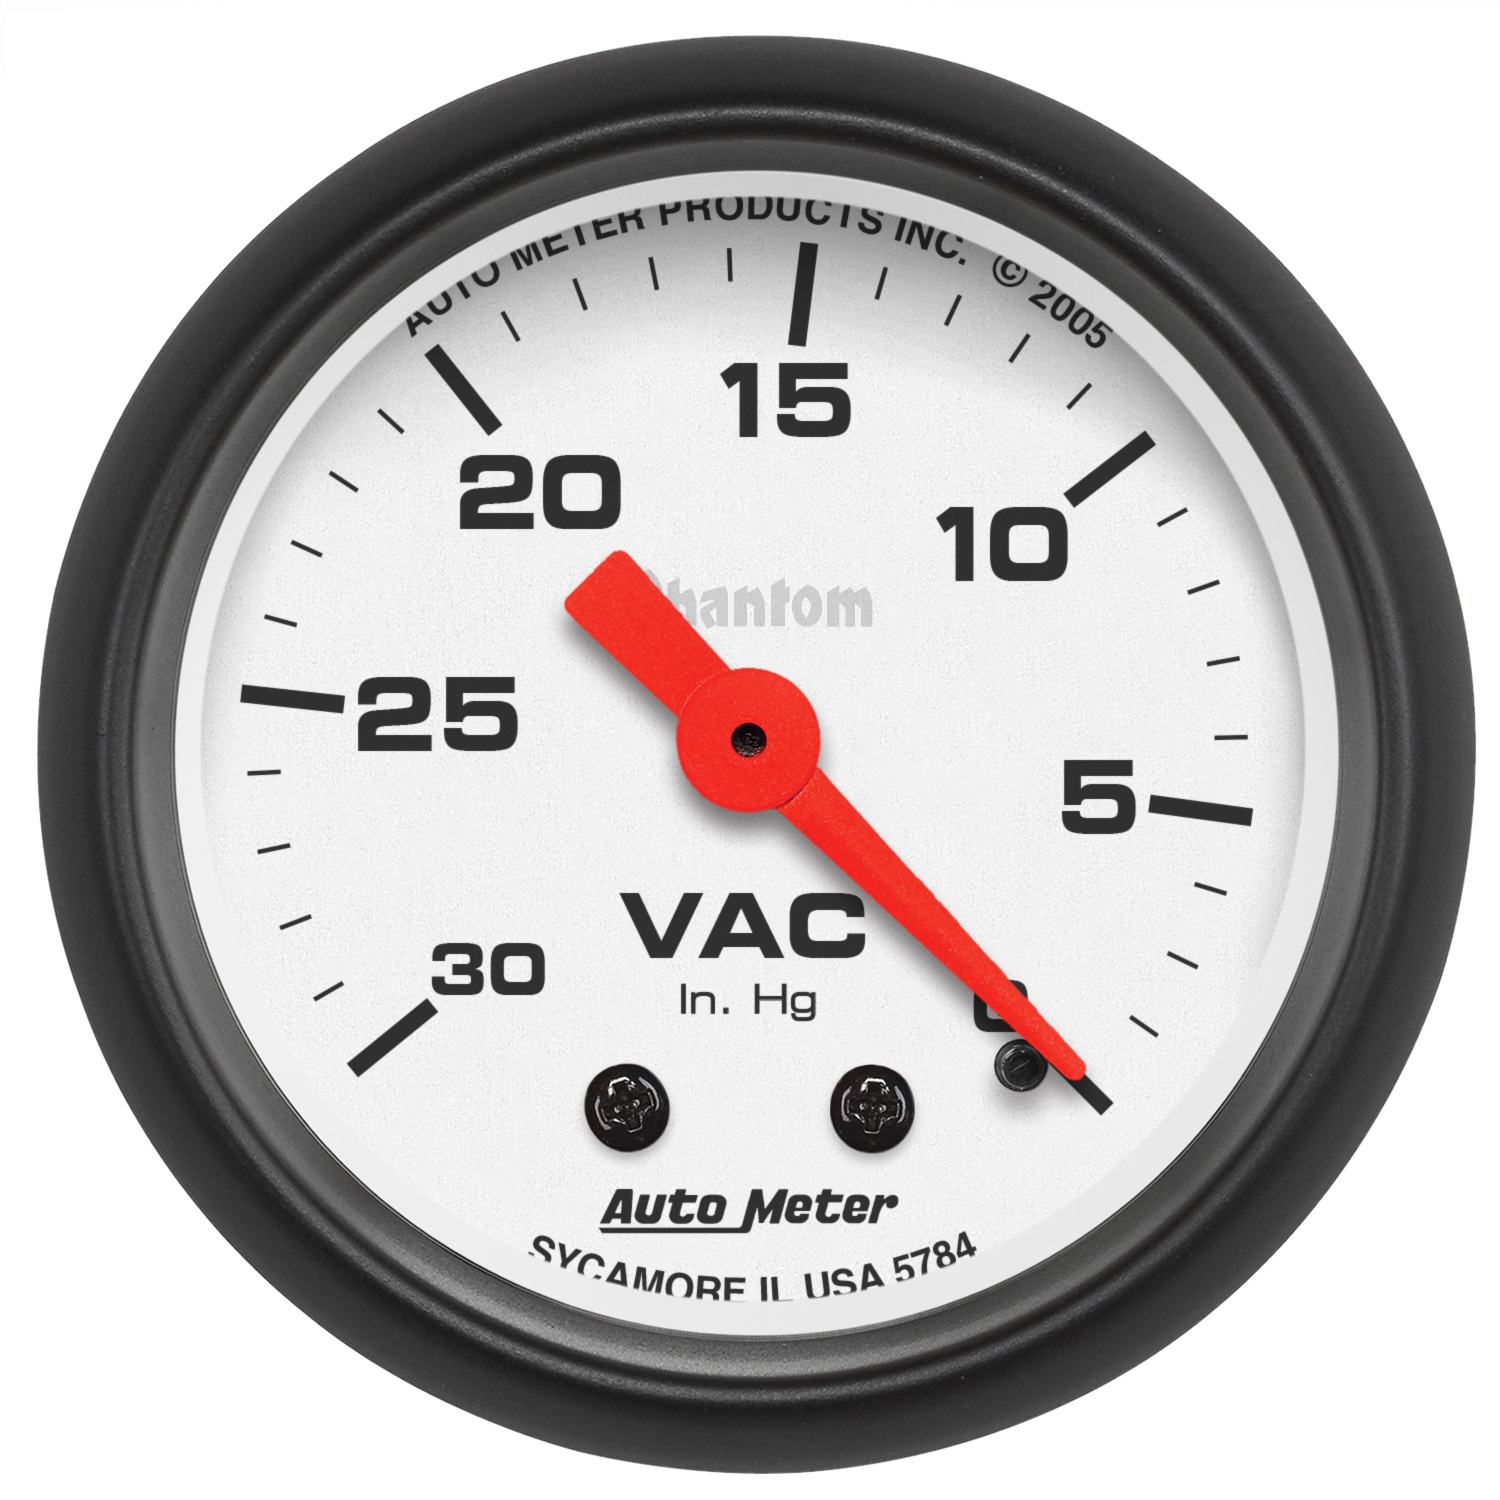 Auto Meter Auto Meter 5784 Phantom; Mechanical Vacuum Gauge